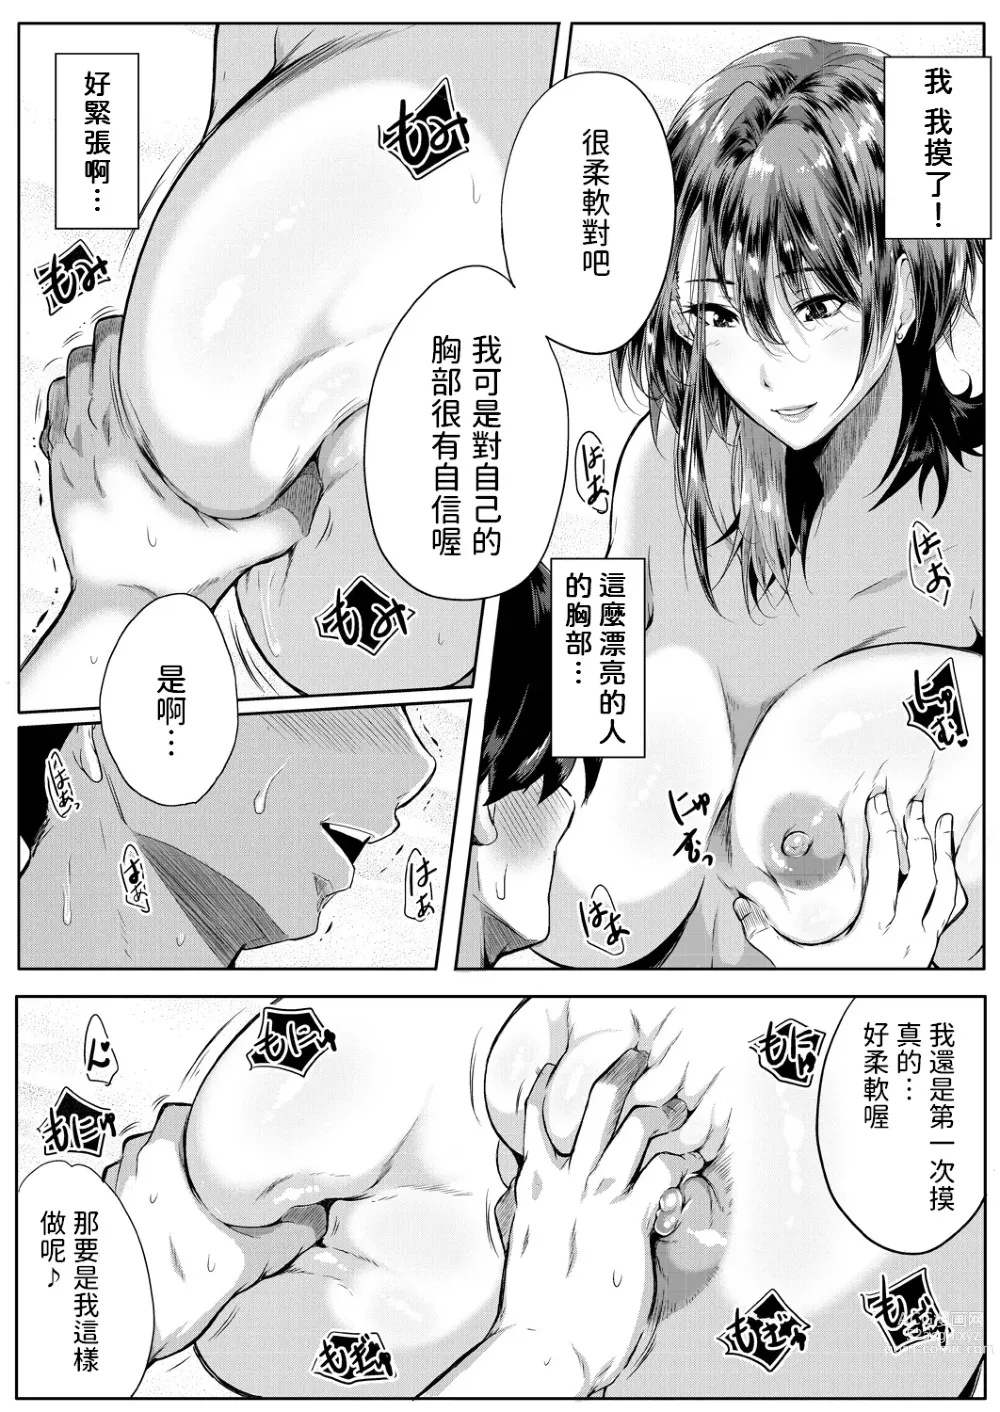 Page 21 of manga Strawberry Mermaid